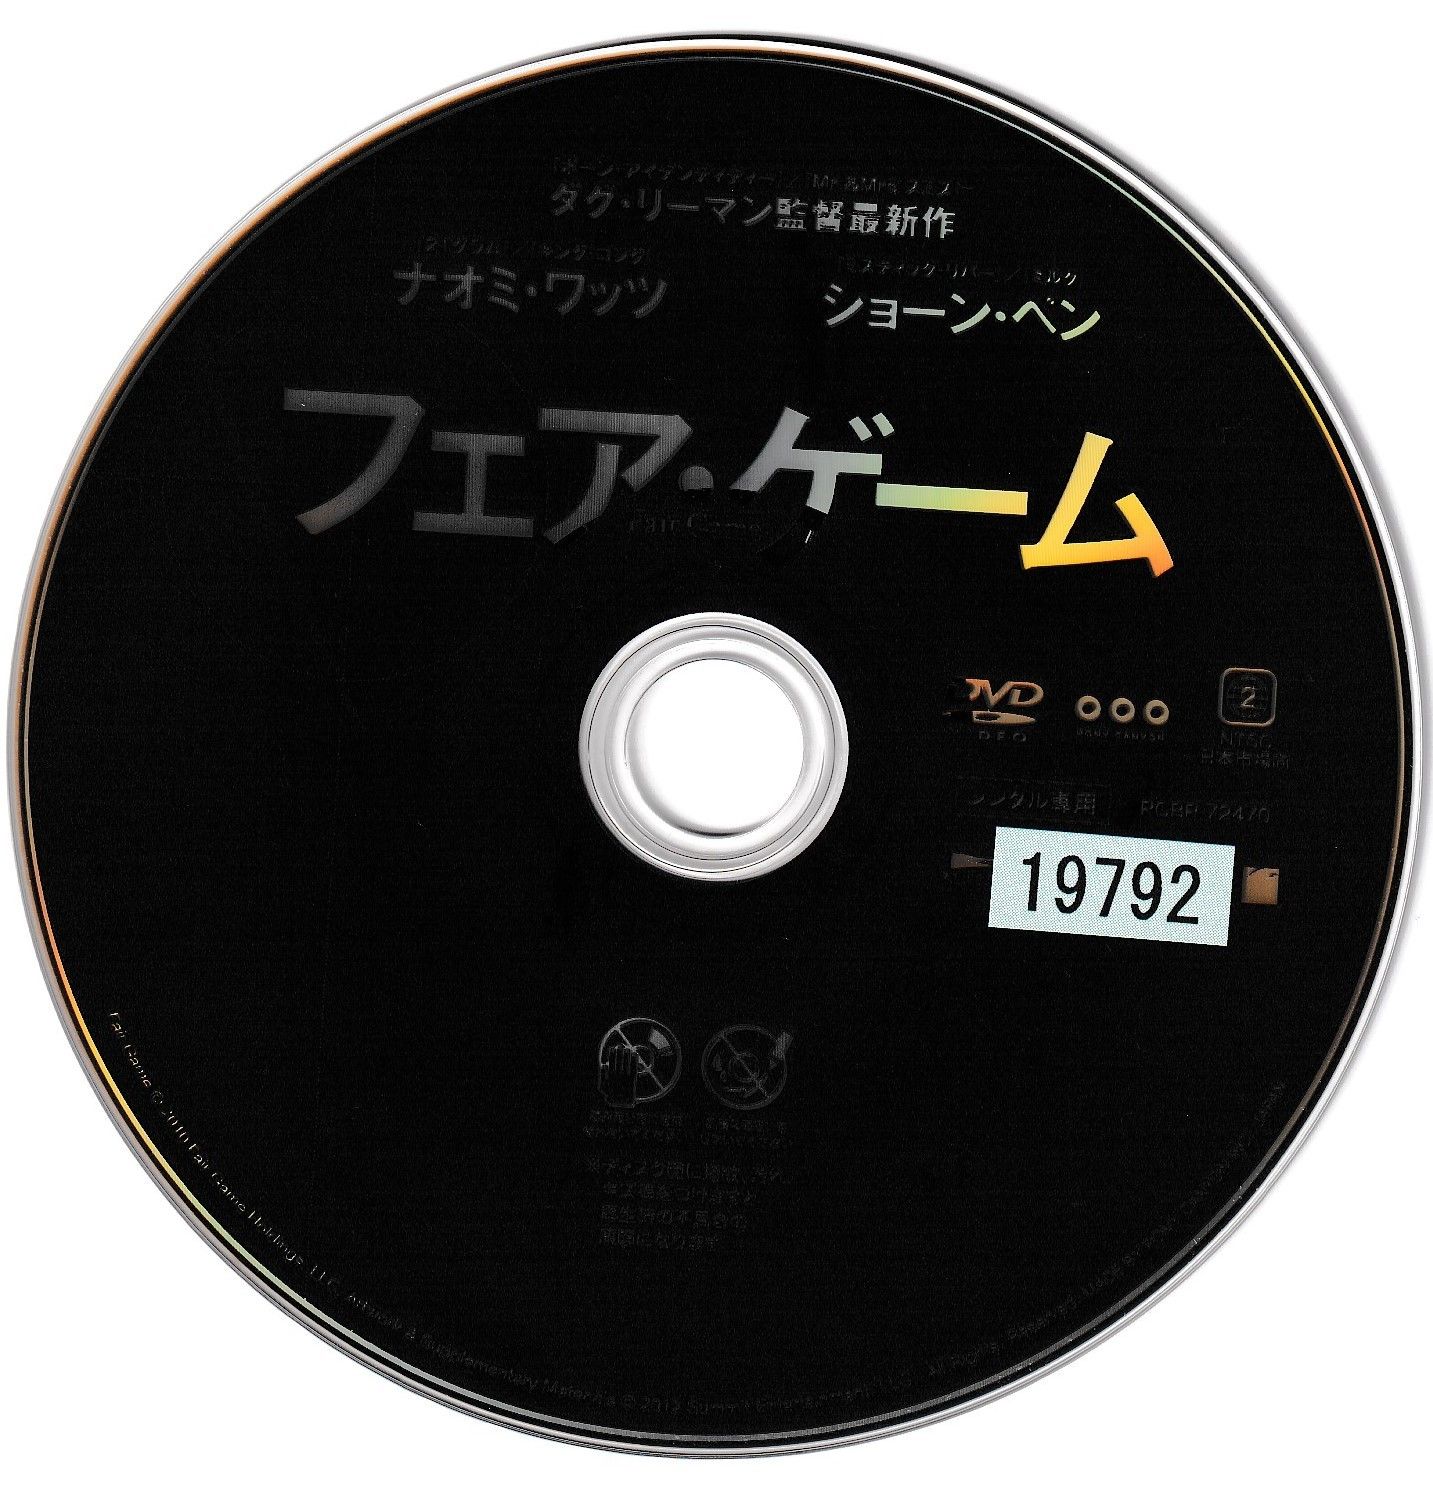 KD 0990 フェア・ゲーム 中古DVD - メルカリ